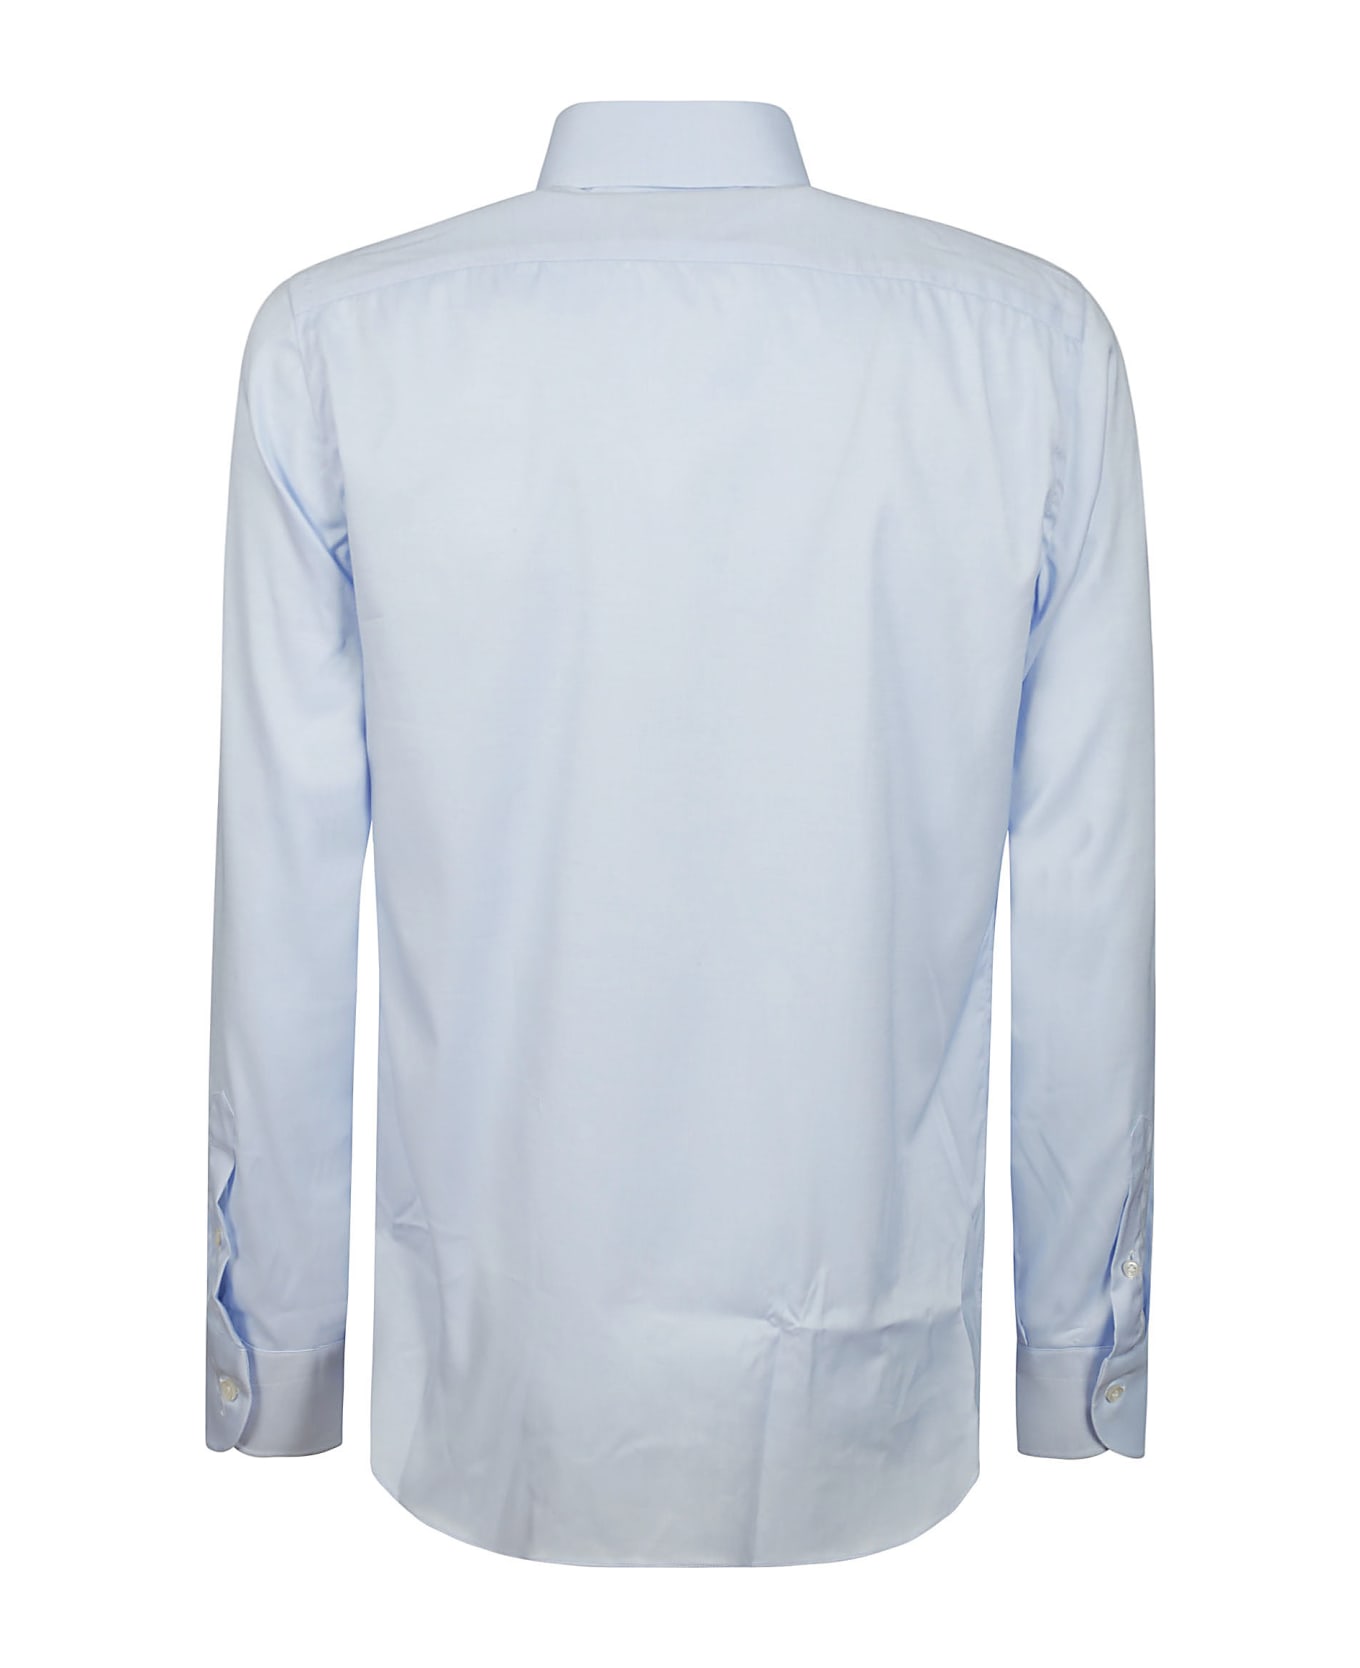 Borriello Napoli Shirt No Iron - Blue シャツ